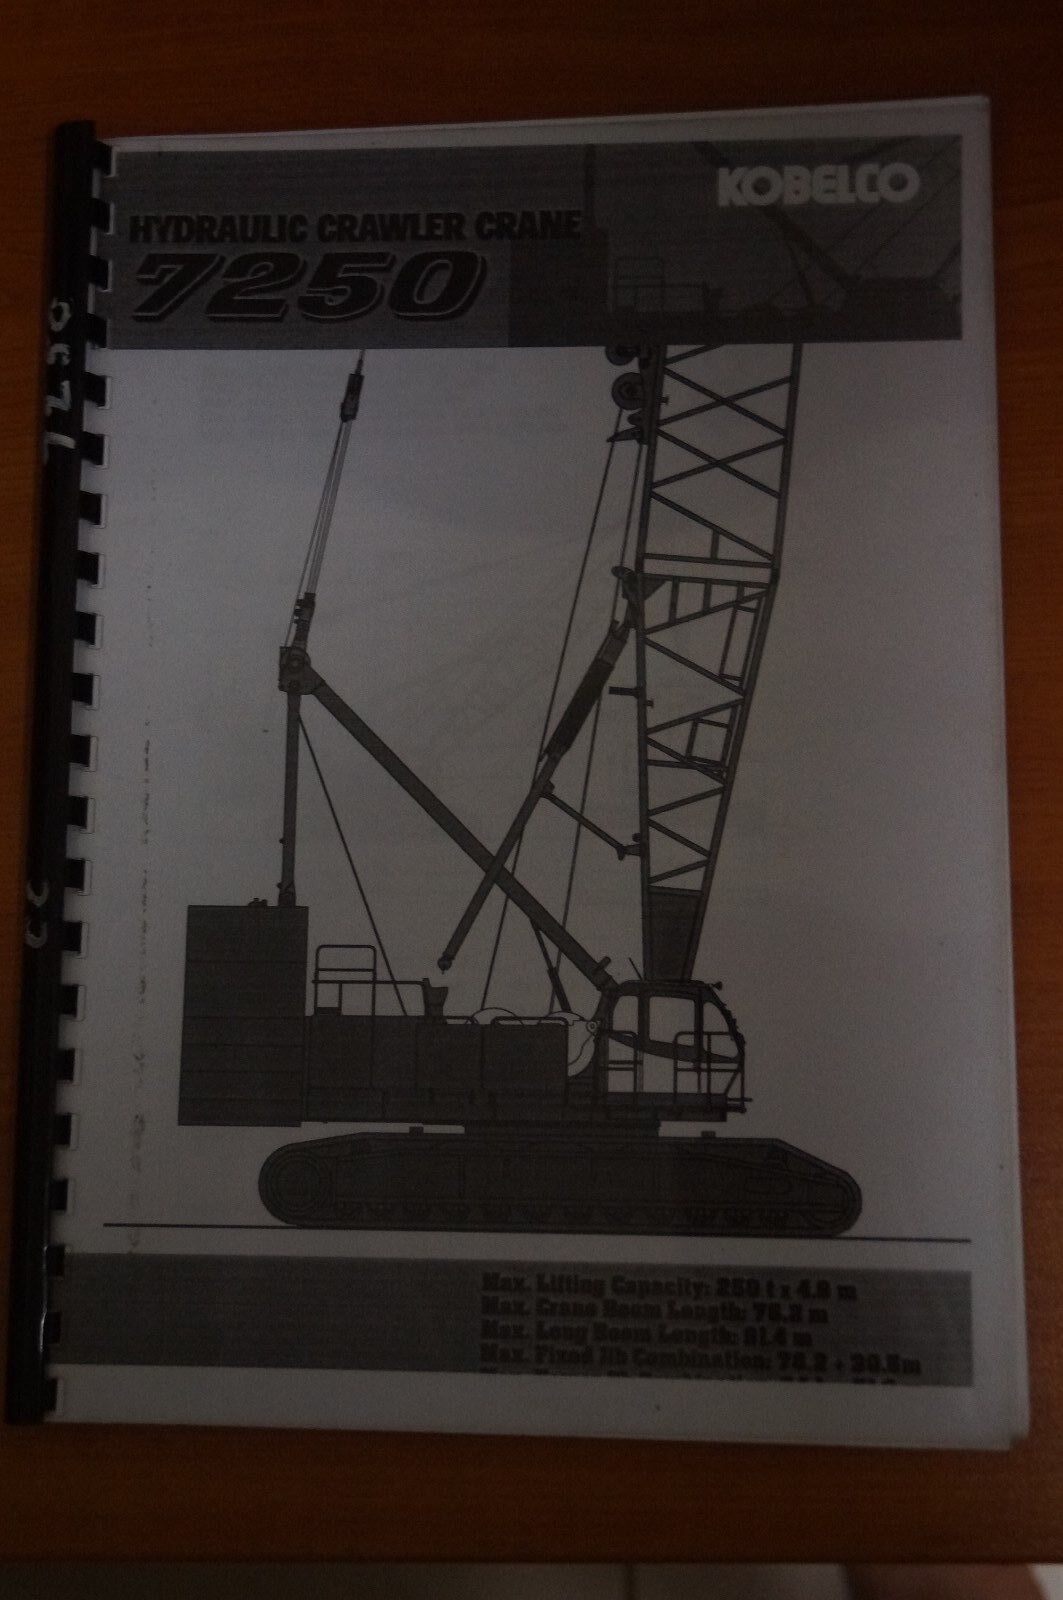 Kobelco Hydraulic Crawler Crane 7250 Manual